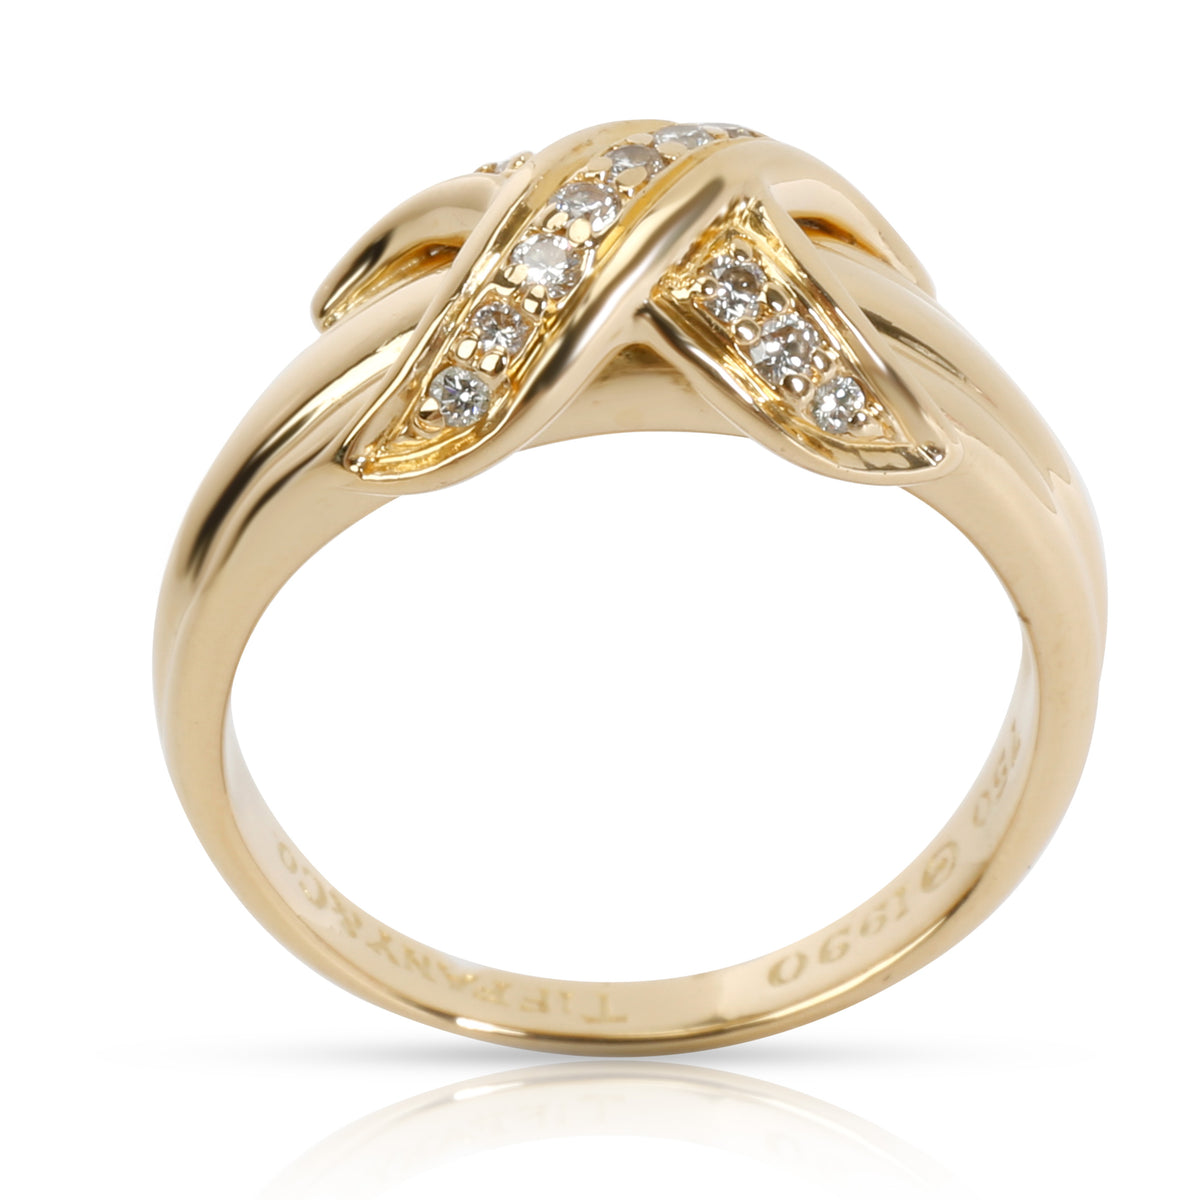 Tiffany & Co. Vintage X Diamond Ring in 18K Yellow Gold 0.13 CTW